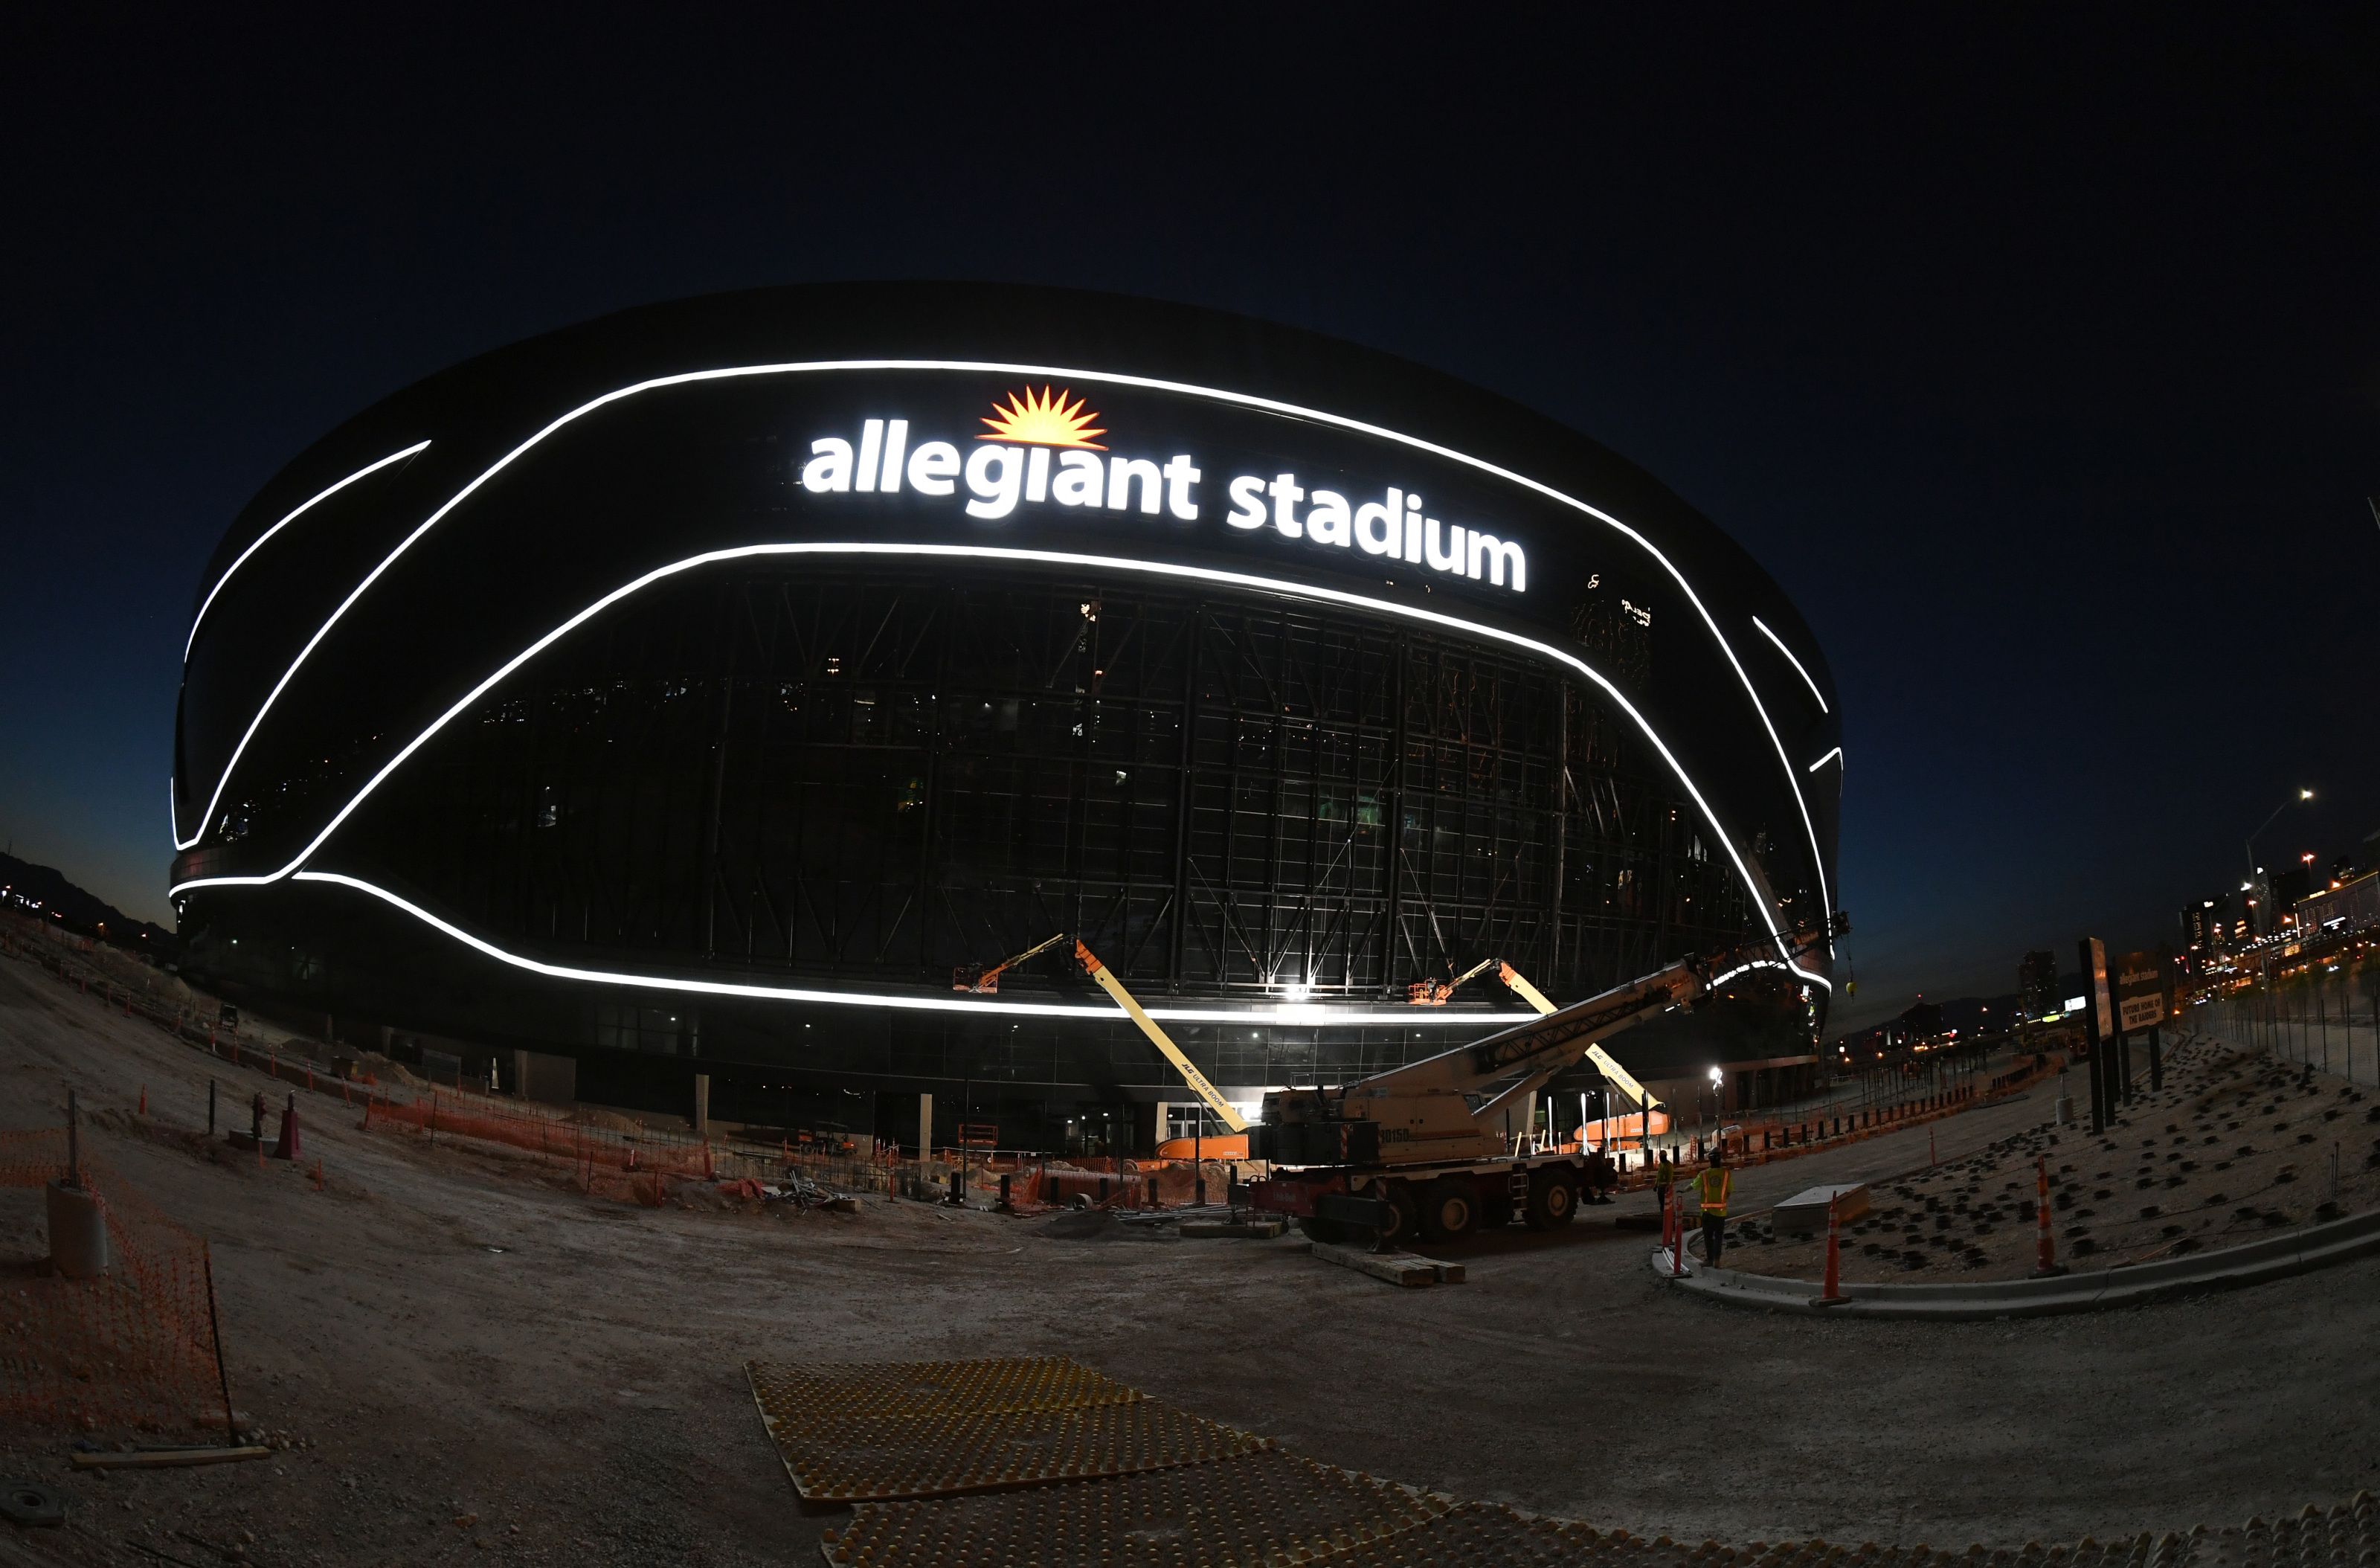 Las Vegas Raiders' Allegiant stadium resembles Roomba or hockey puck